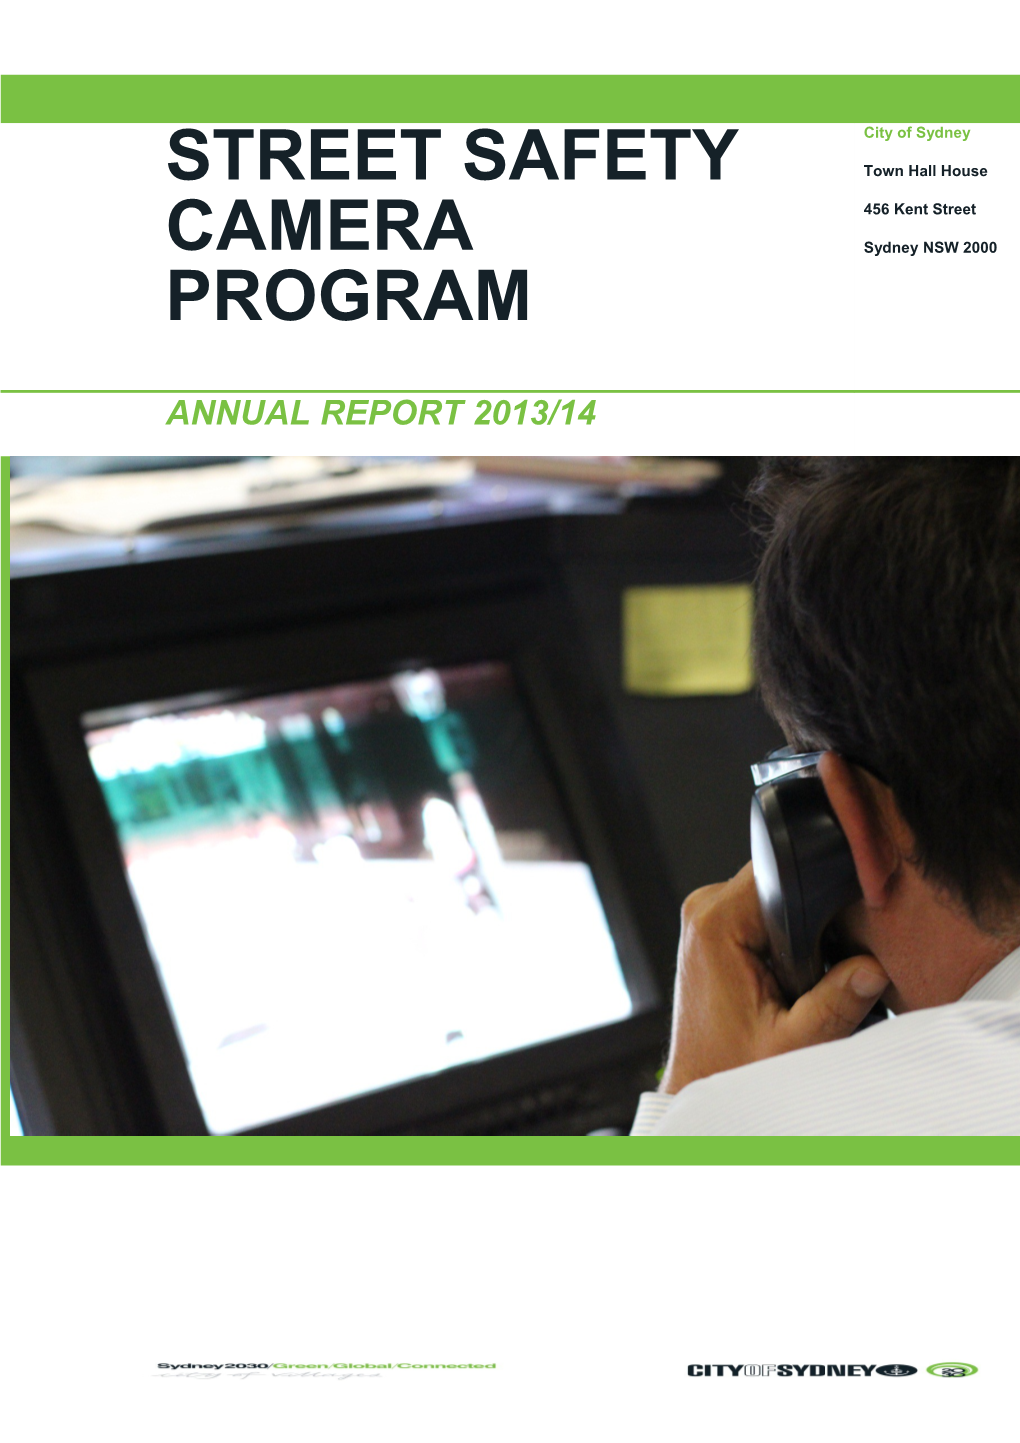 Street Safety Program Annual Report 2013/14